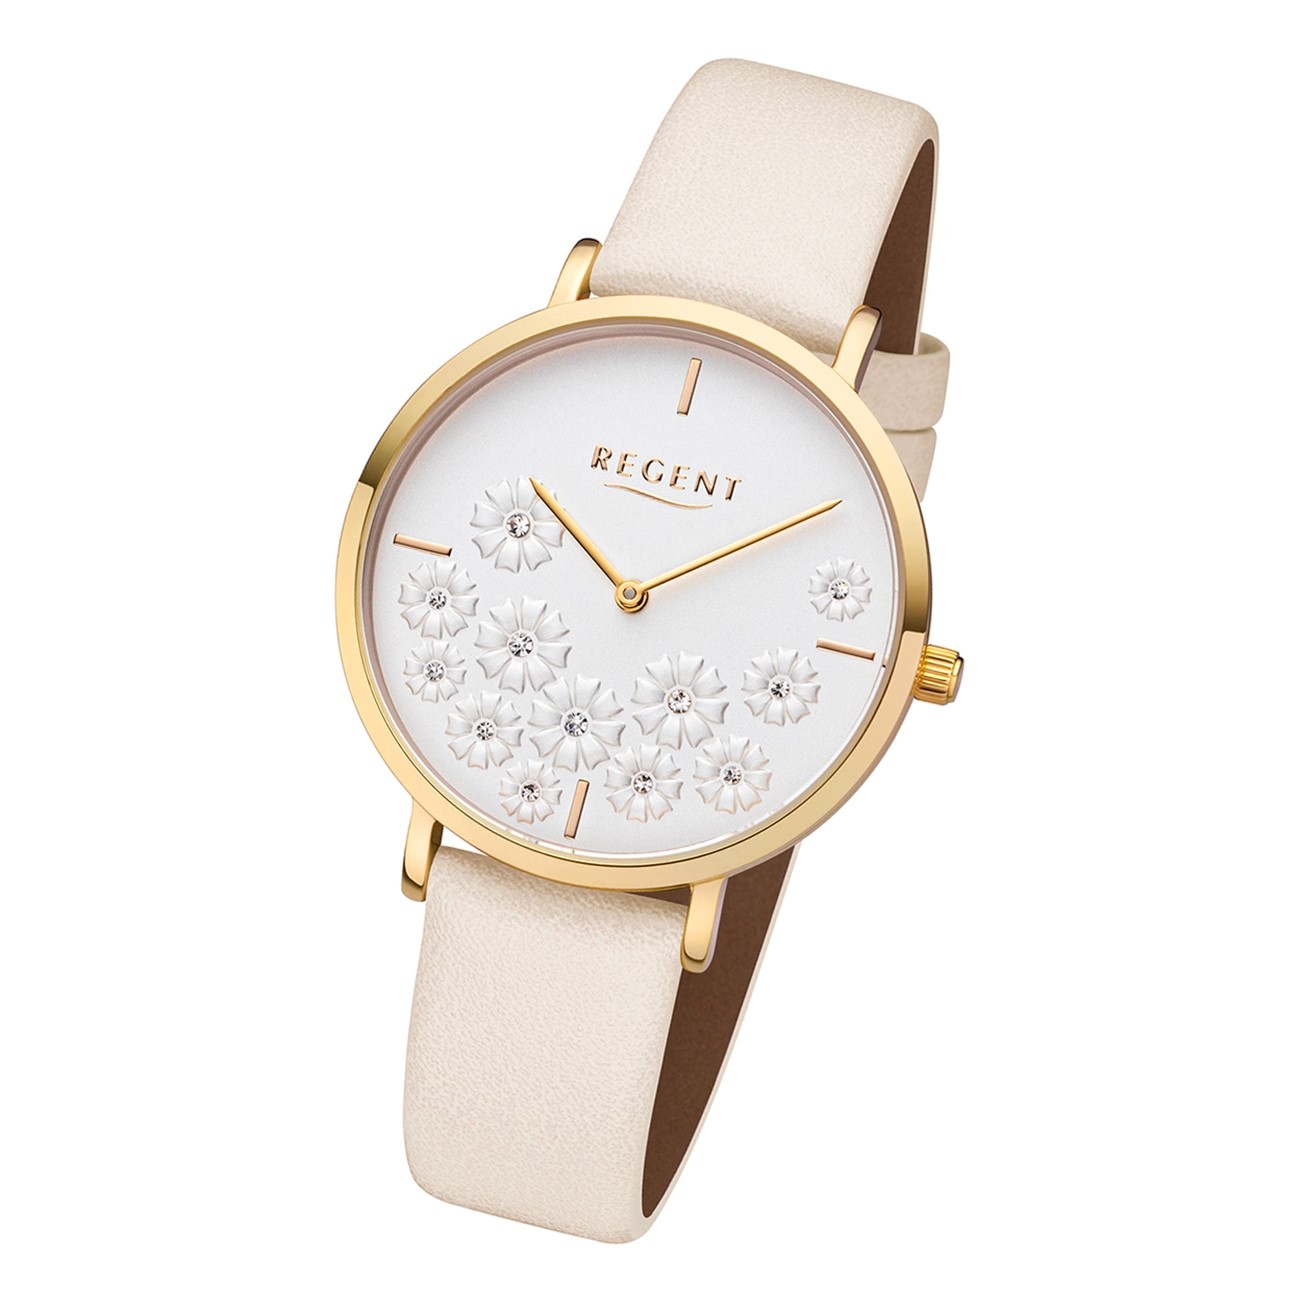 Regent Damen Armbanduhr Analog BA-591 Quarz-Uhr Leder beige URBA591